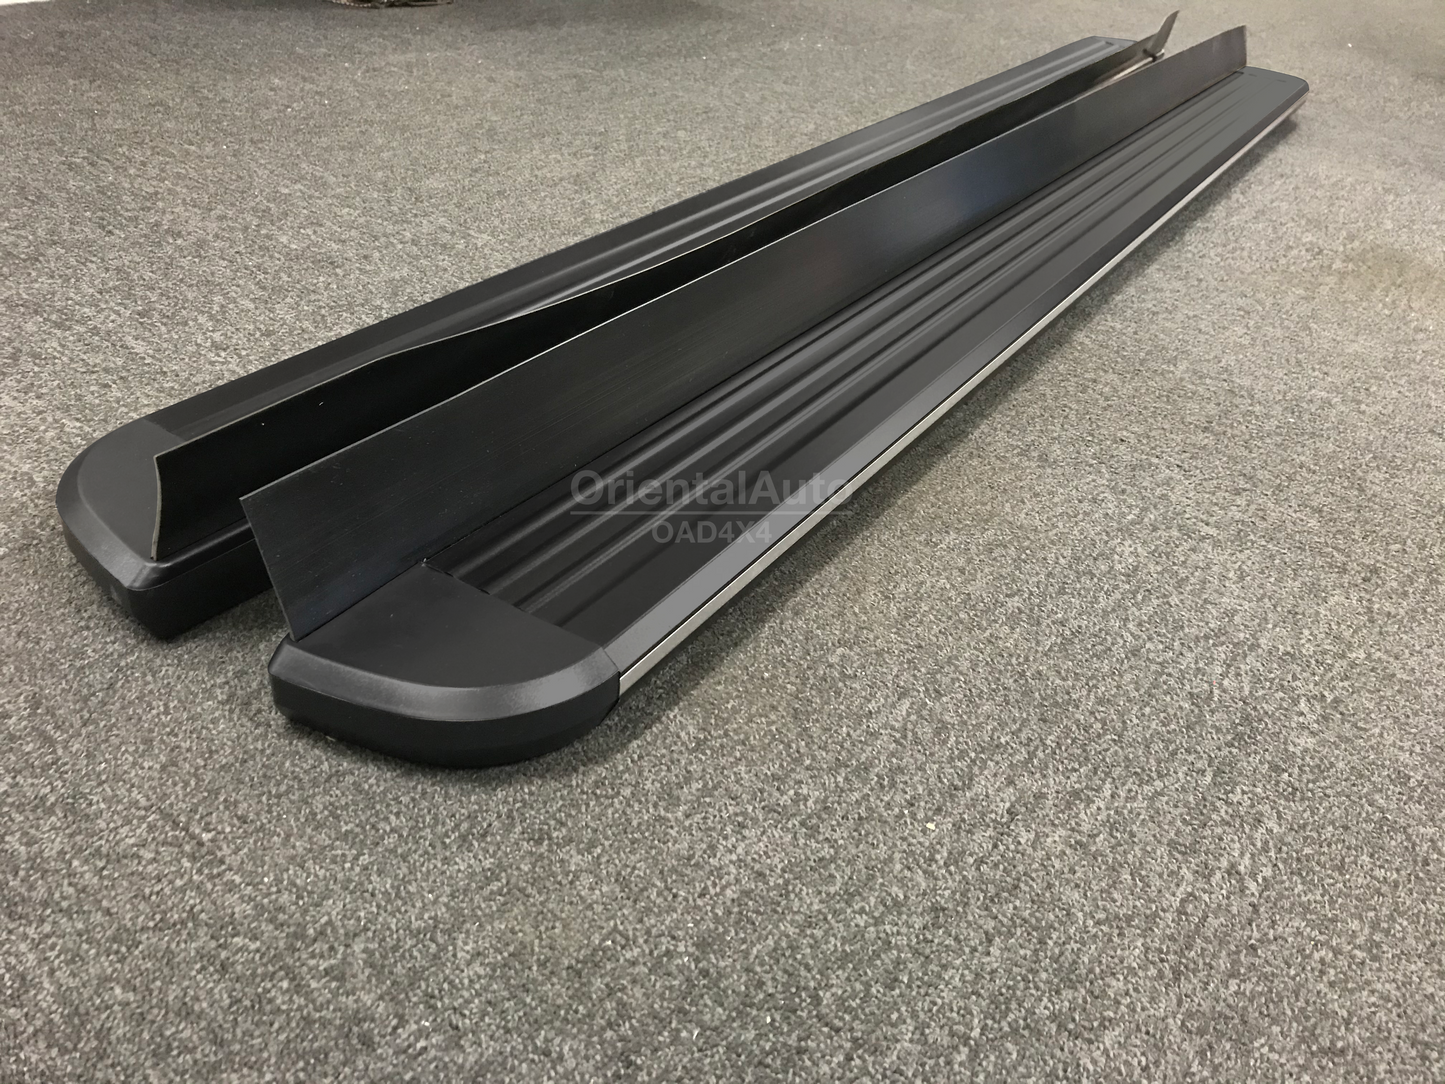 Black Aluminum Side Steps Running Board For Subaru XV G4X 2011-2017 #LP